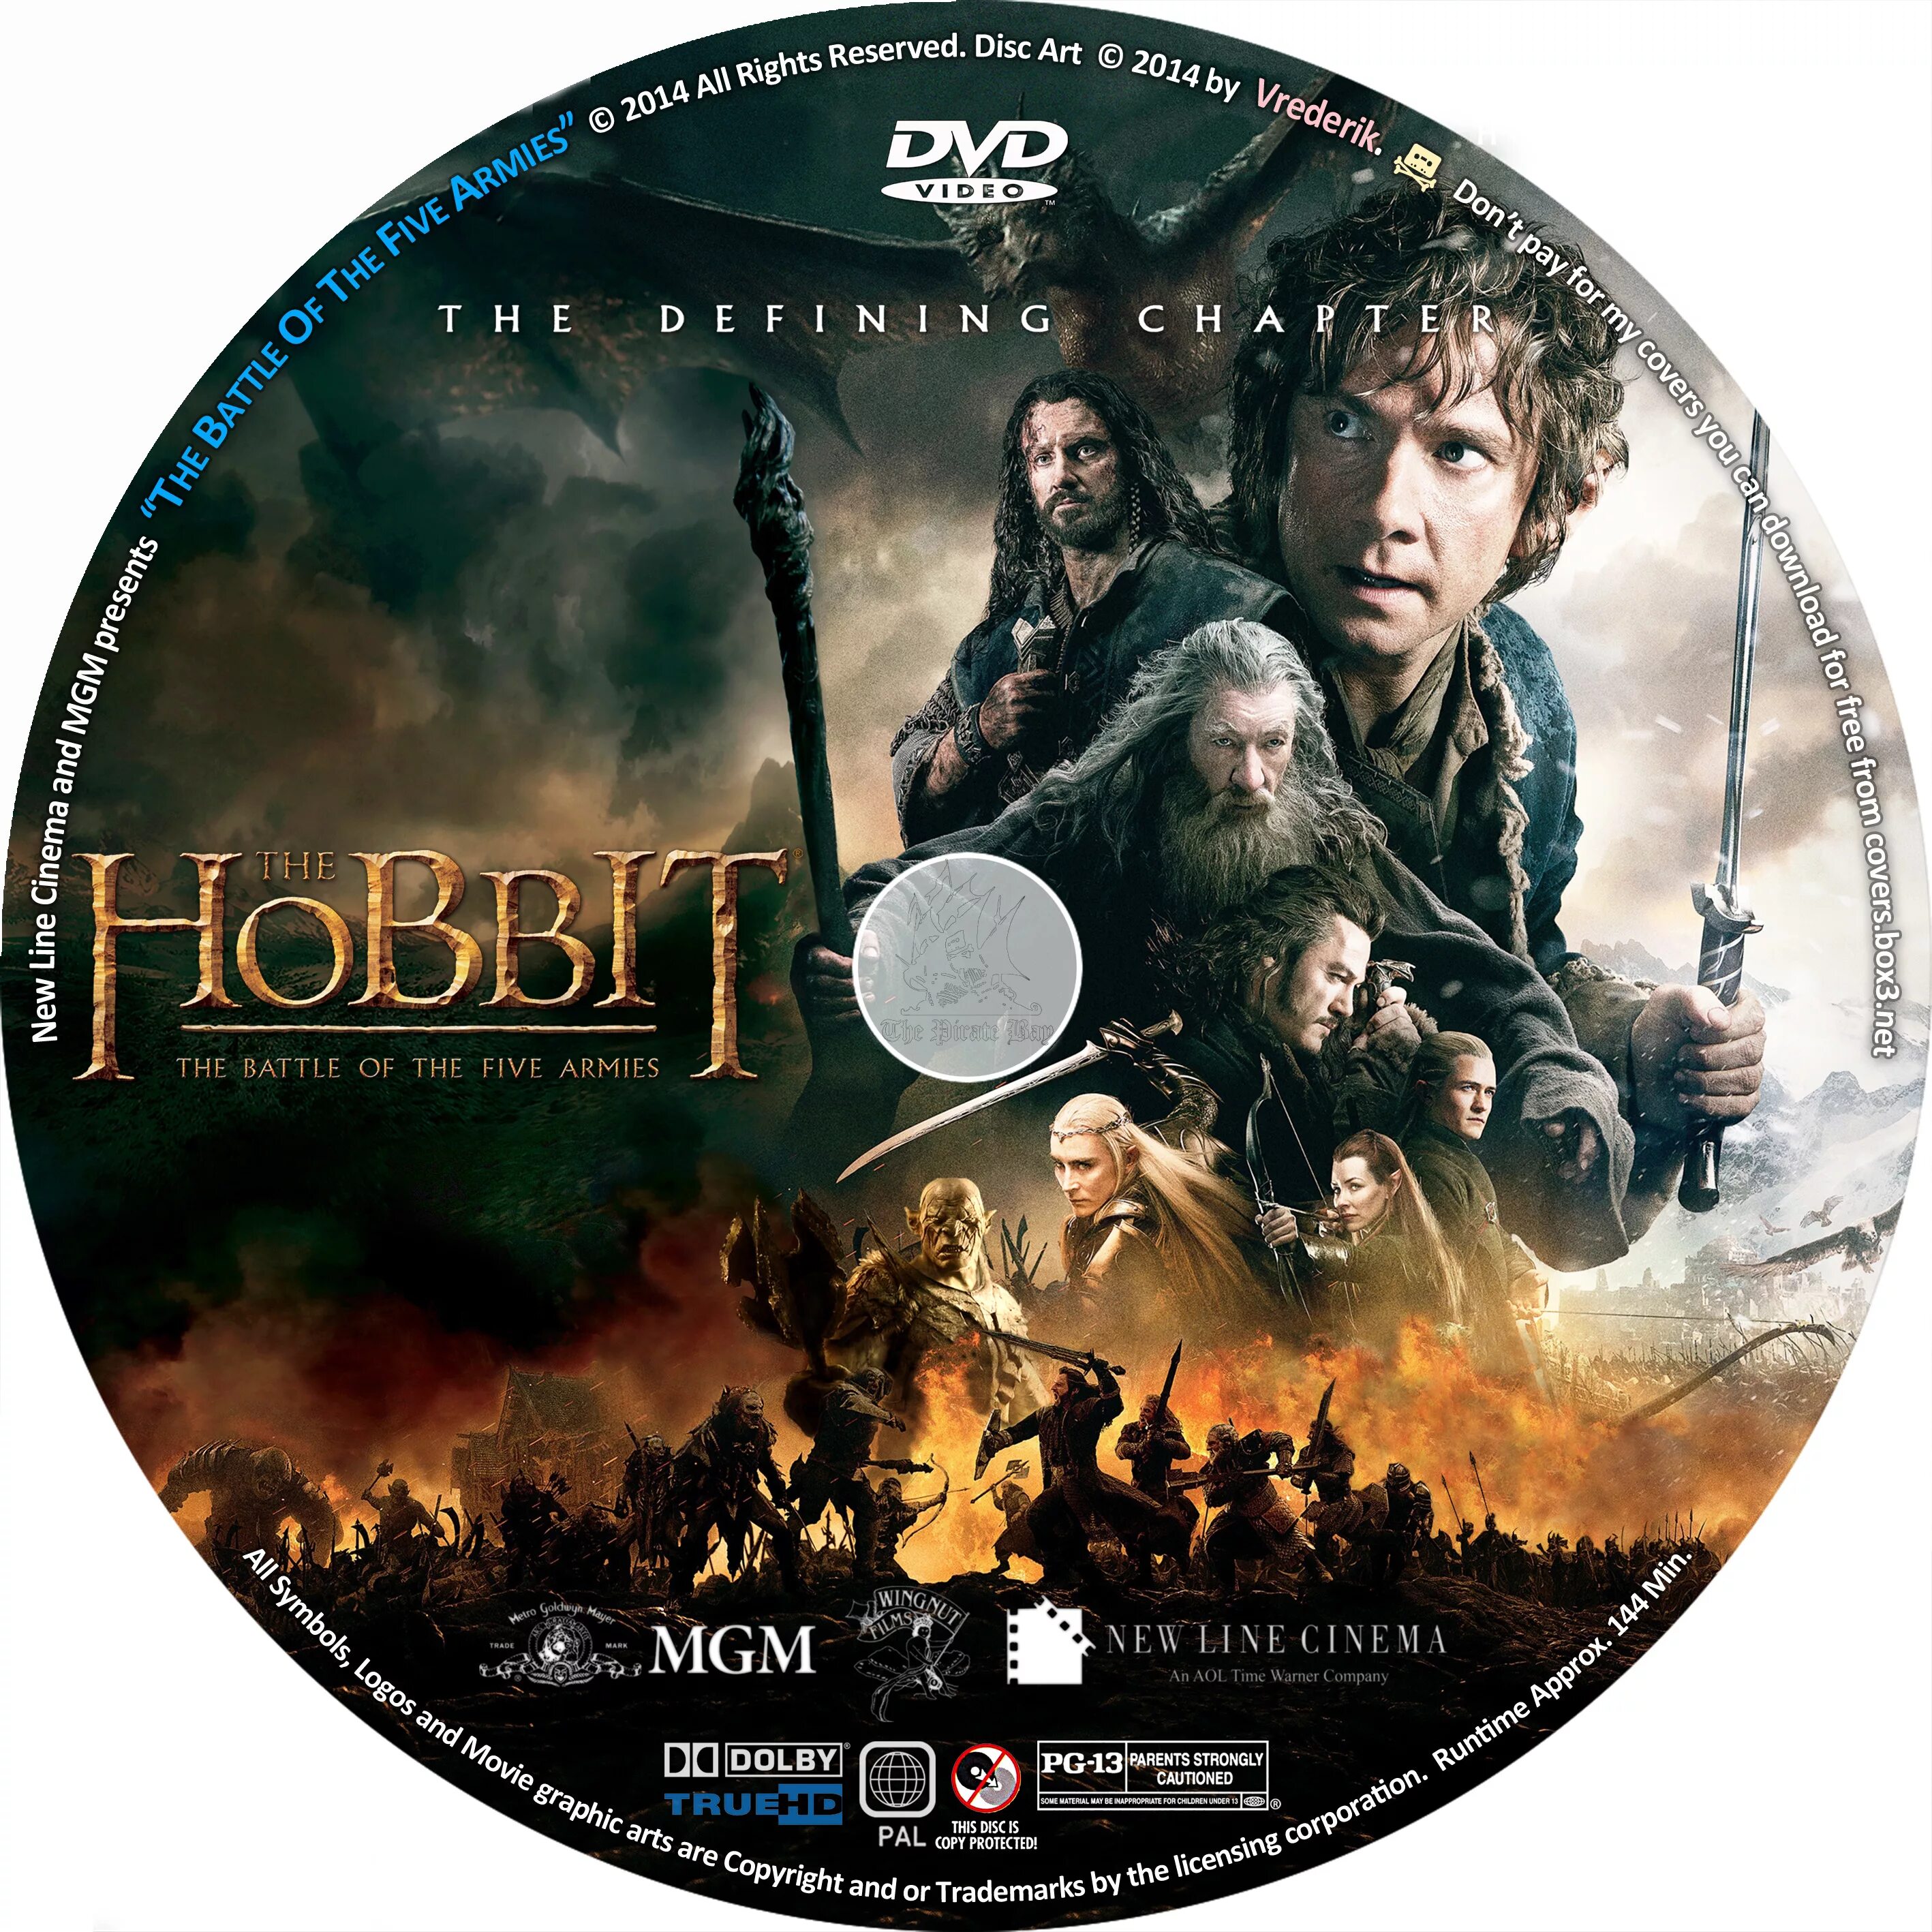 Blu ray магическая битва 2. Хоббит битва пяти воинств диск. The Hobbit: the Battle of the Five Armies. Хоббит. Битва пяти воинств Blu-ray. Хоббит. Битва пяти воинств 3d Blu-ray.